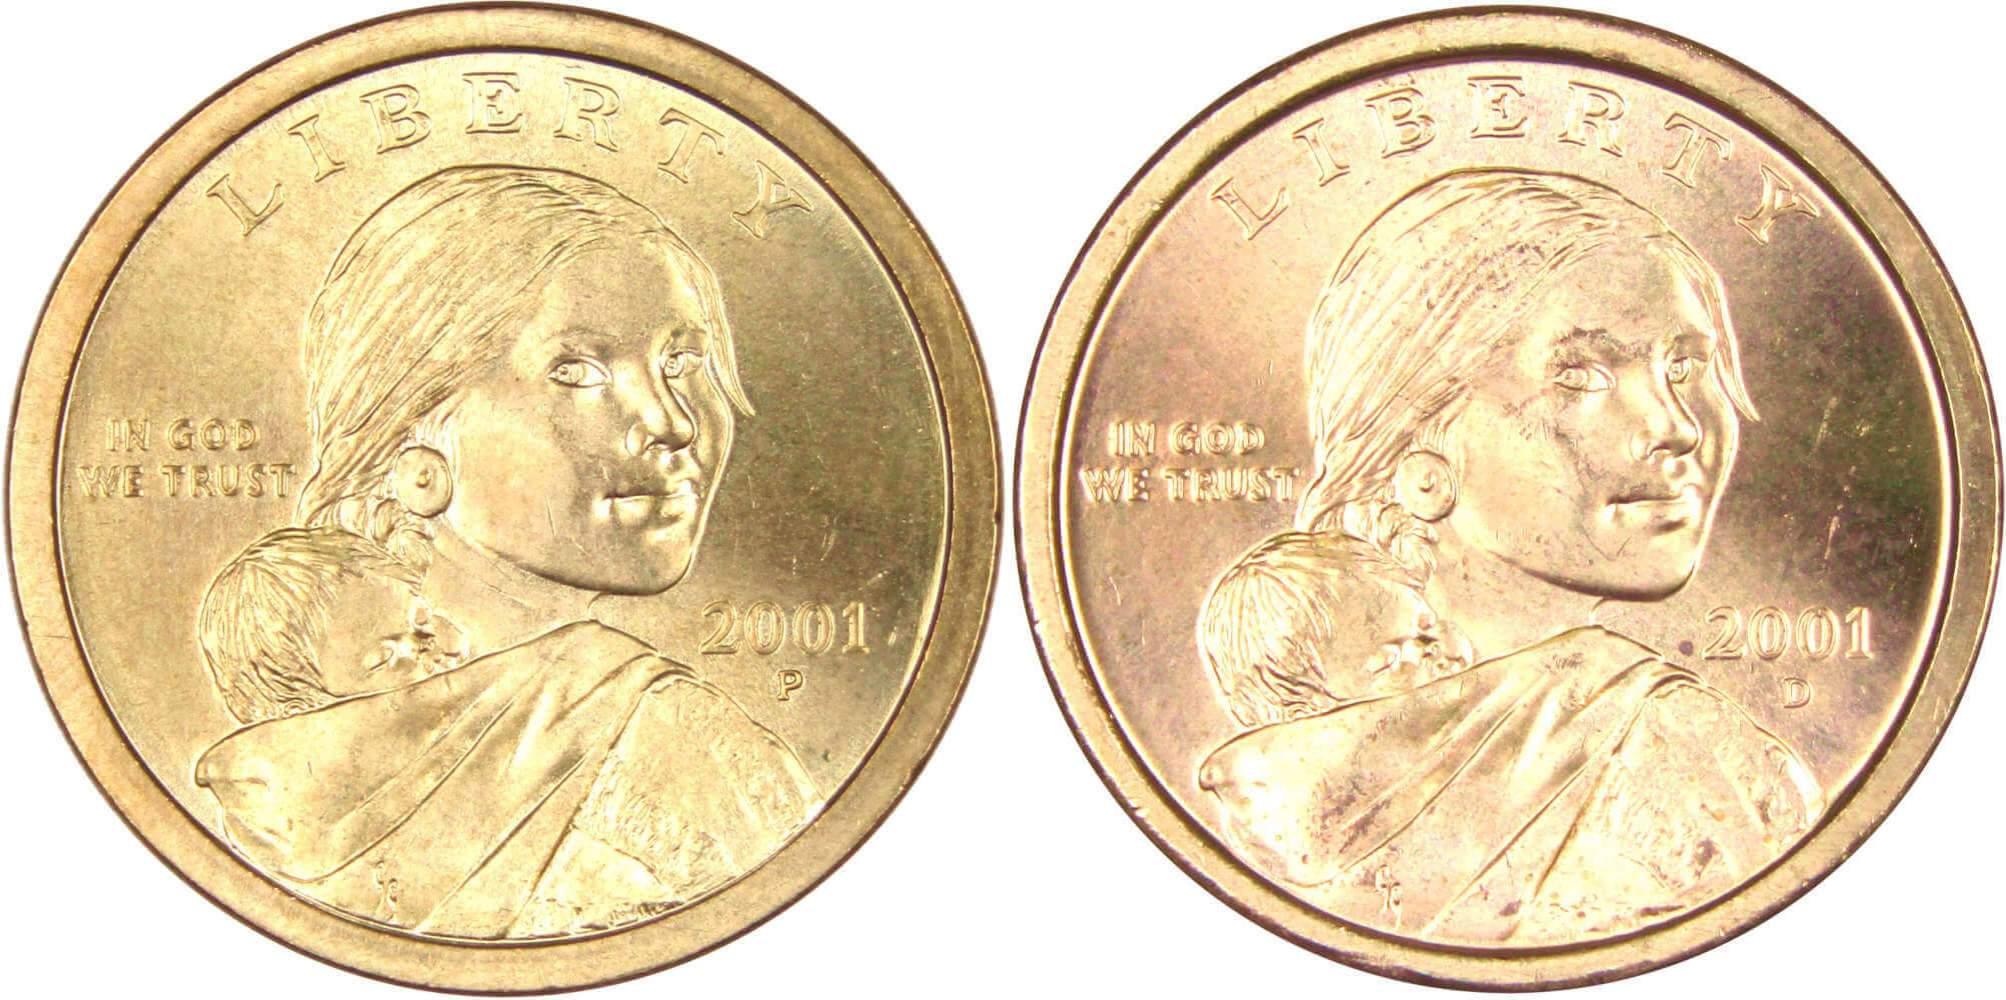 2001 P&D Sacagawea Native American Dollar 2 Coin Set BU Uncirculated $1